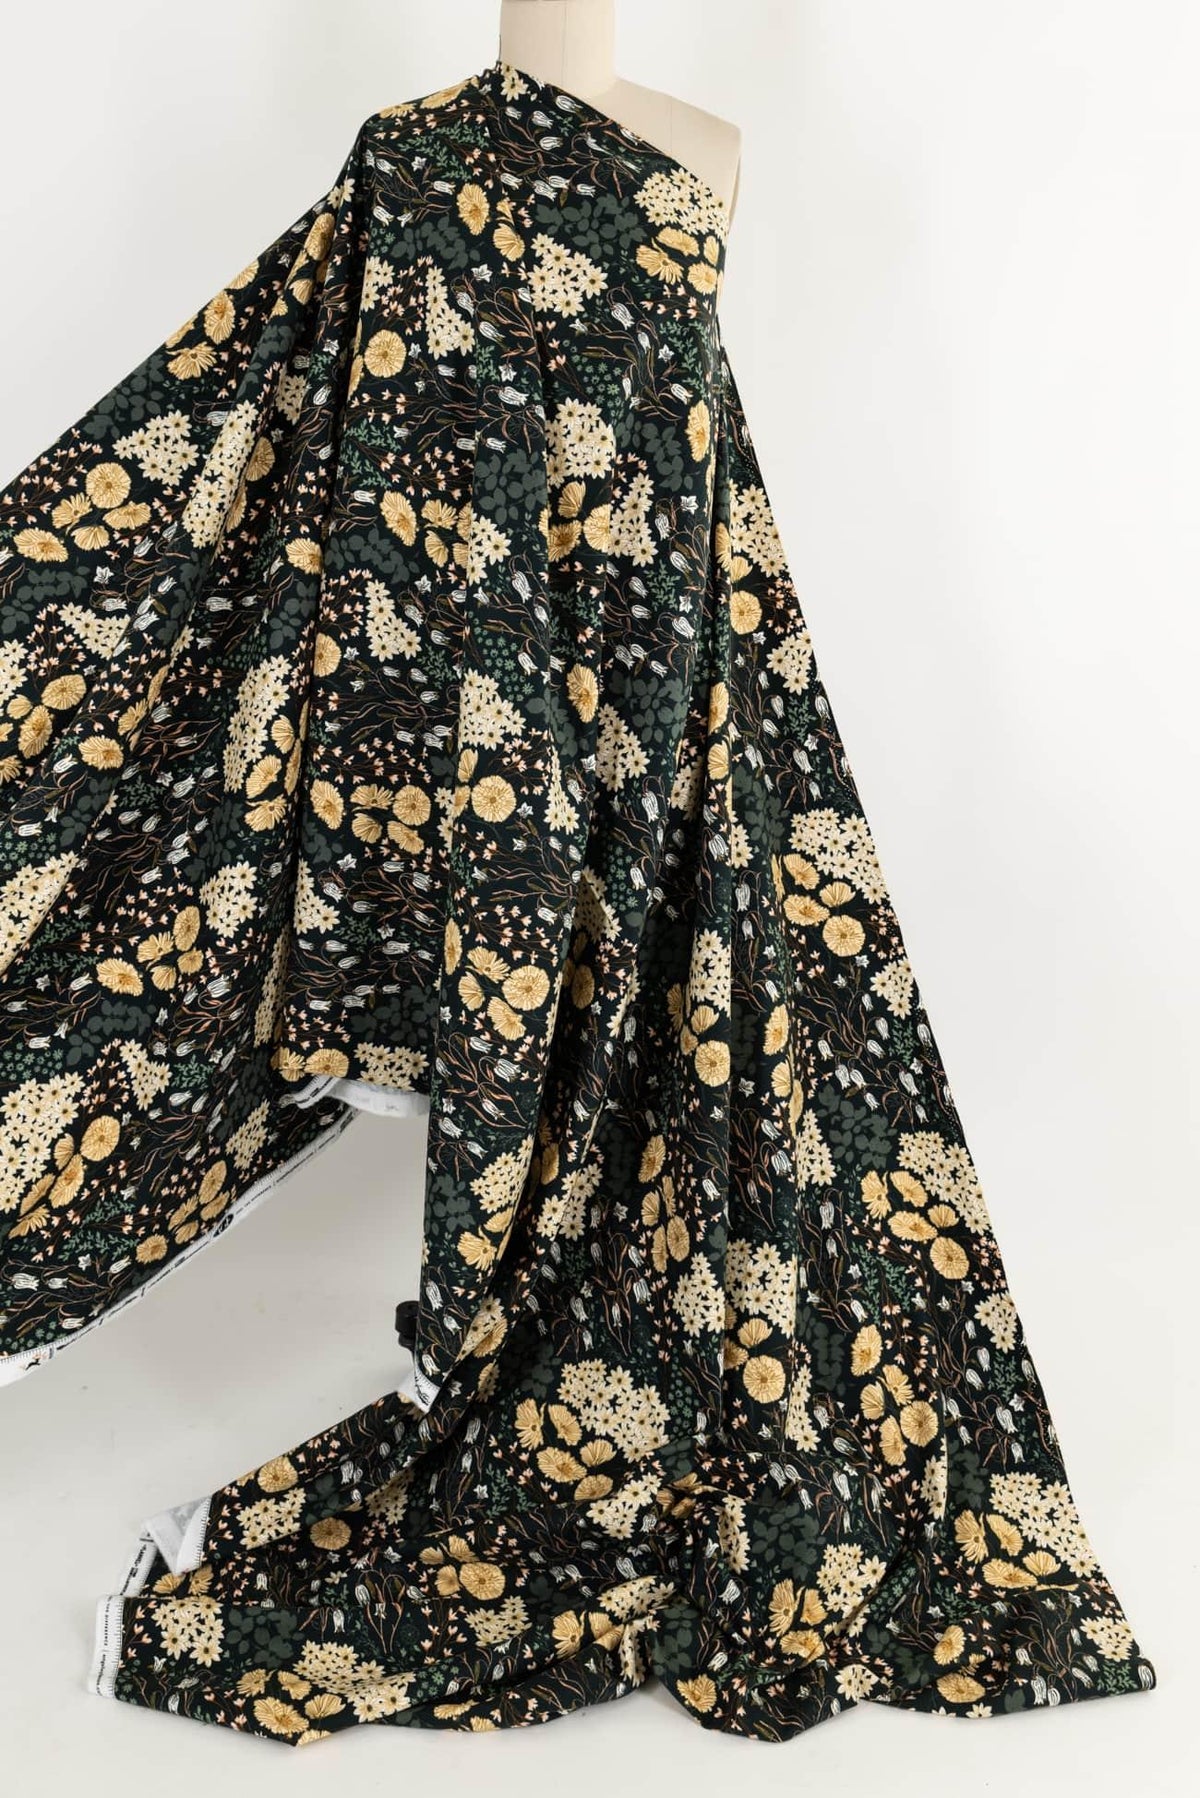 Native Flora Cotton Flannel Woven - Marcy Tilton Fabrics